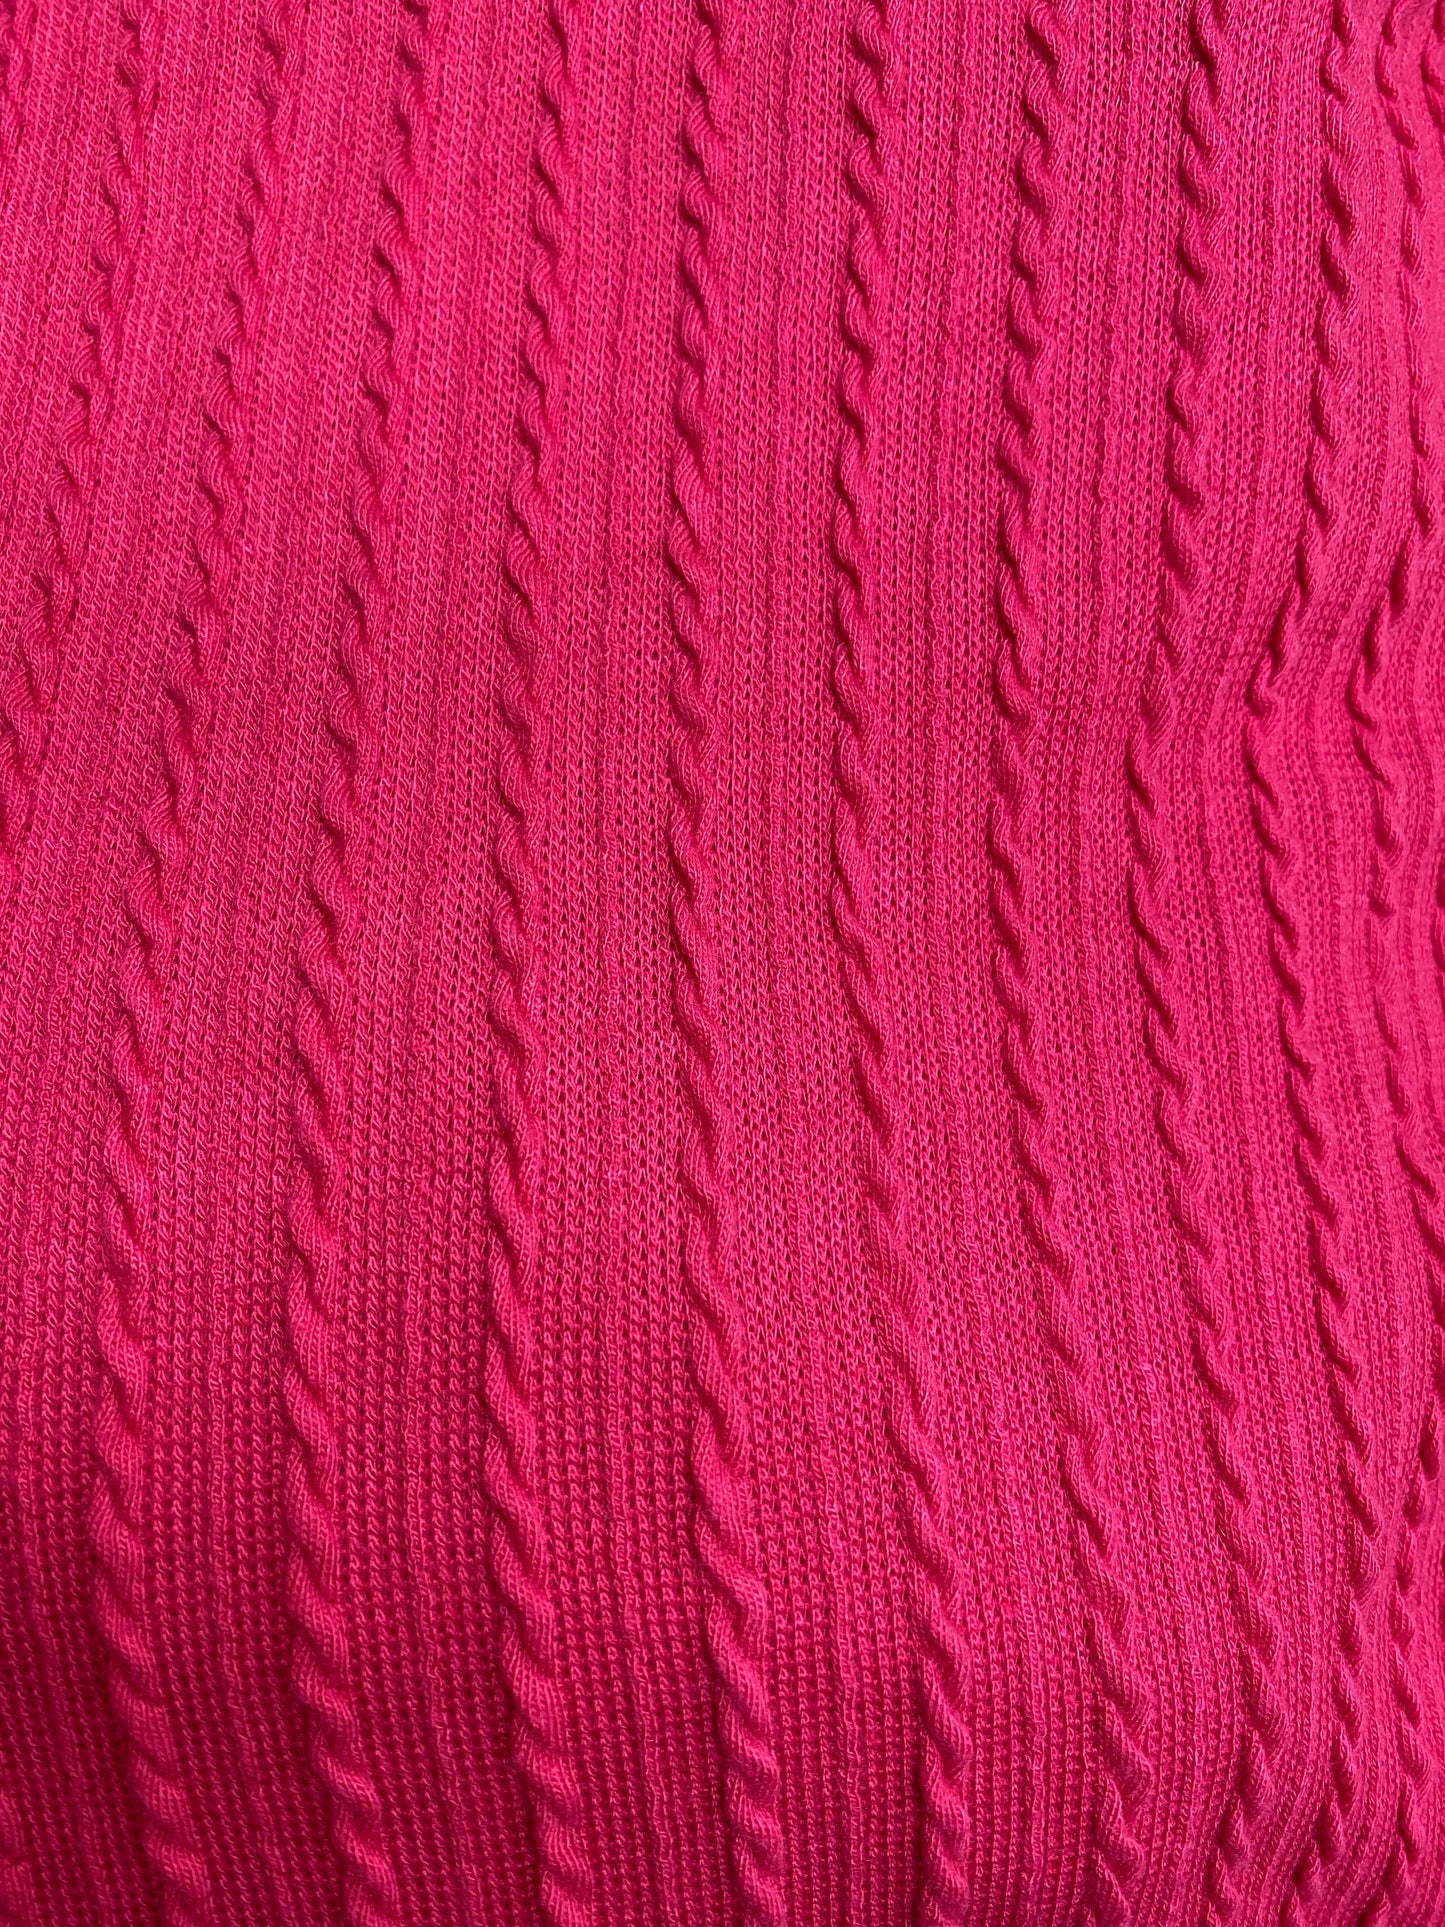 Pink Top Short Sleeve Basic Heimish Usa, Size 3x